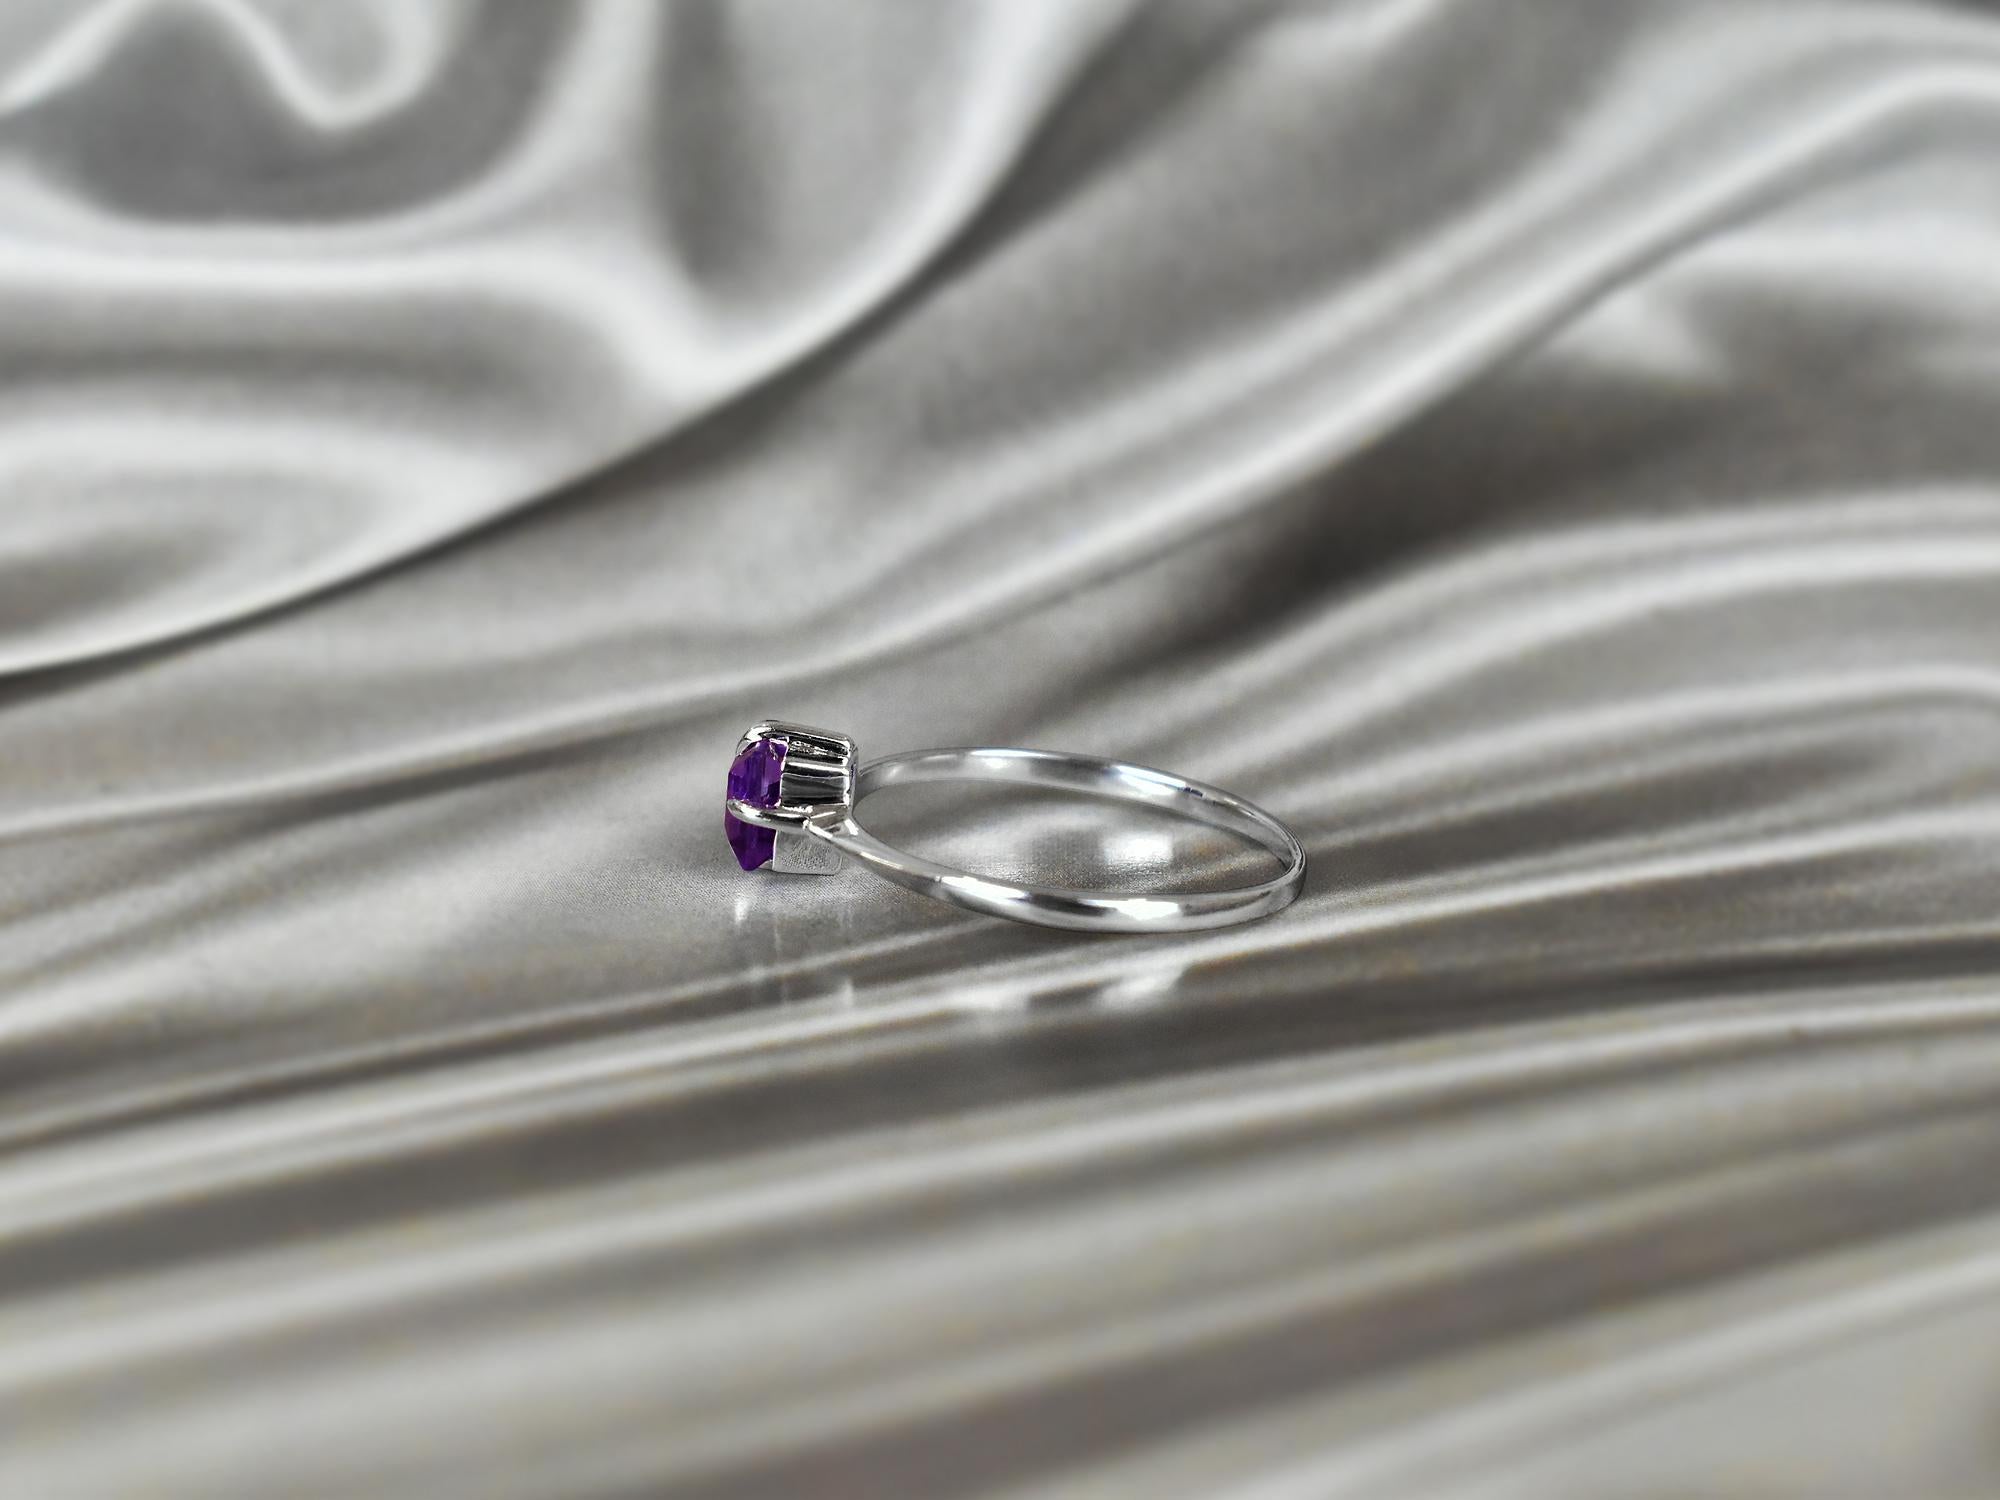 For Sale:  10k Gold Princess Cut 5x5 mm Princess Cut Gemstone Ring Gemstone Engagement Ring 10